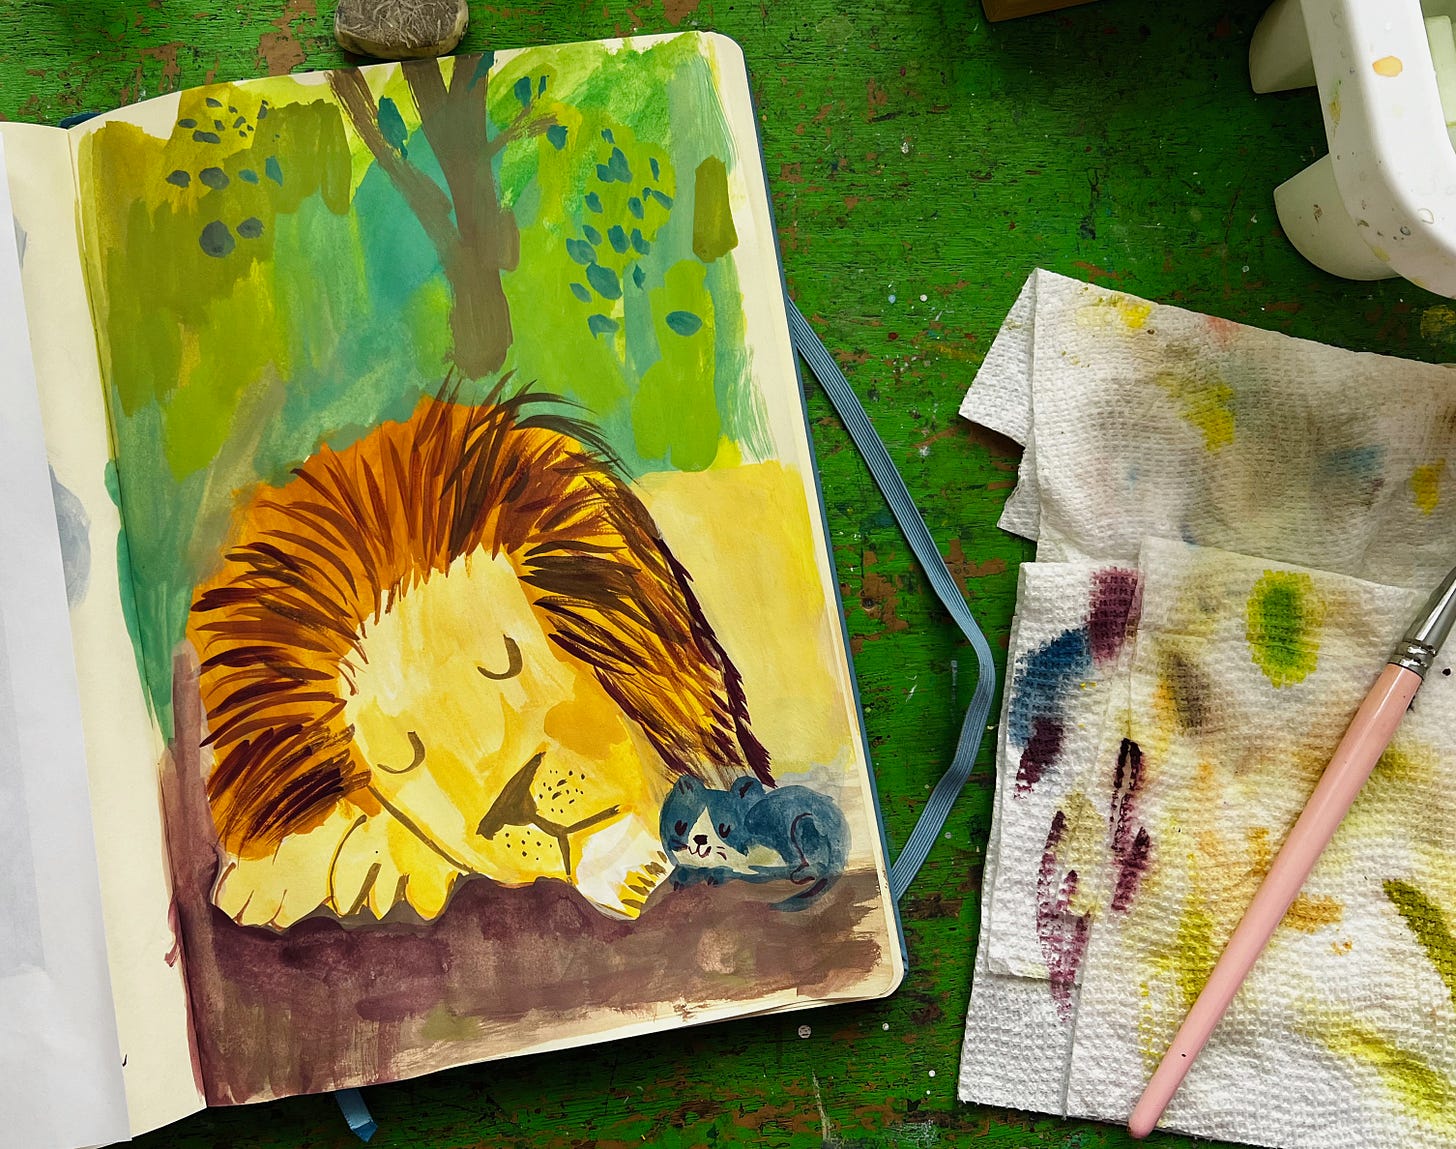 sketchbook illustration of a lion and kitten by beth spencer